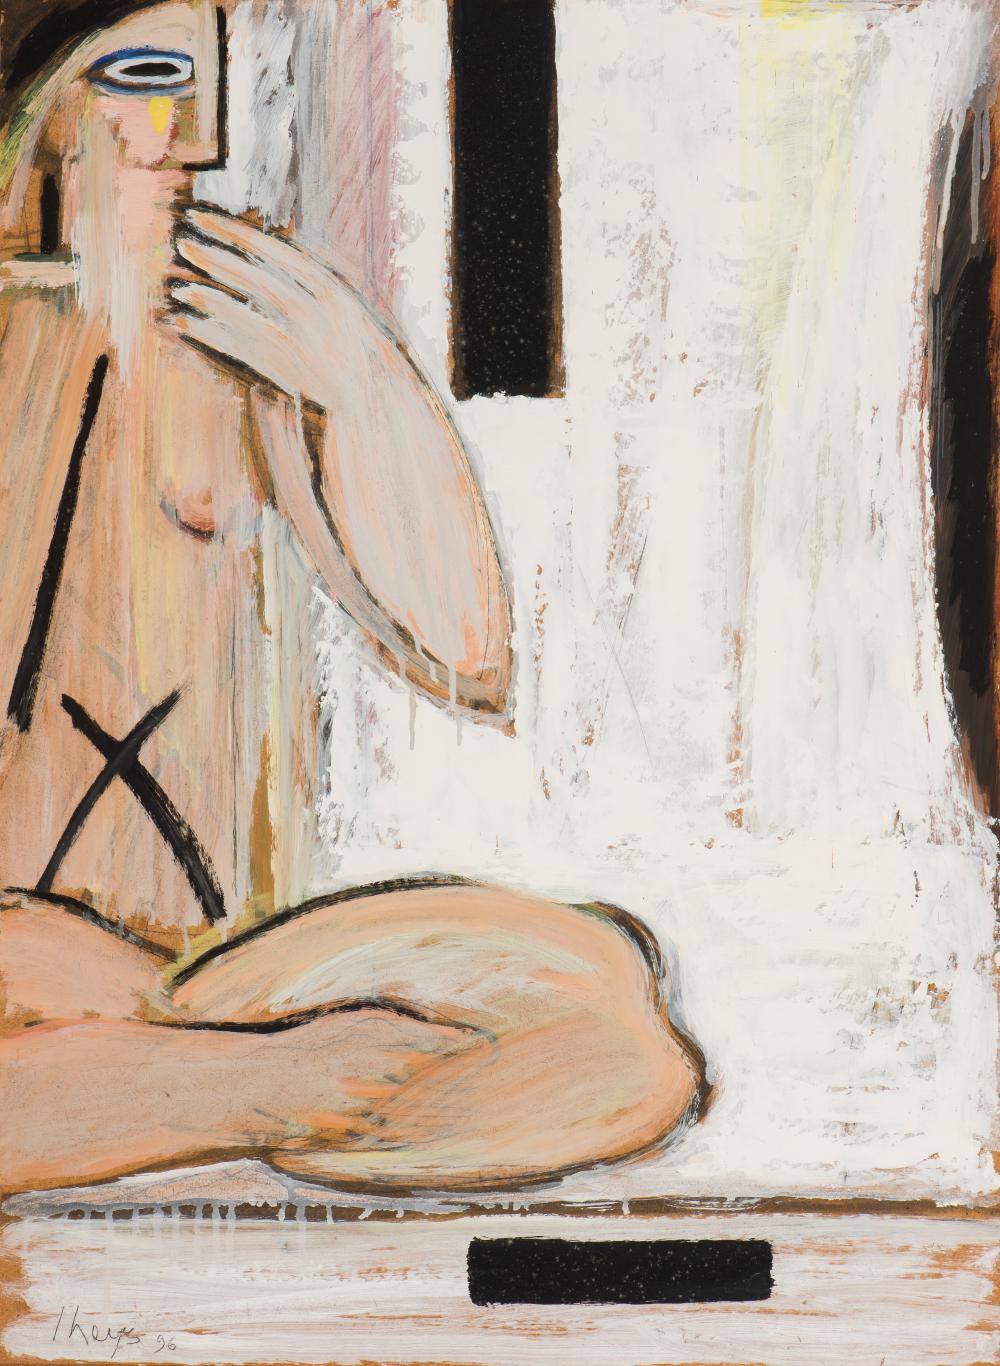 Sitting nude (1996)